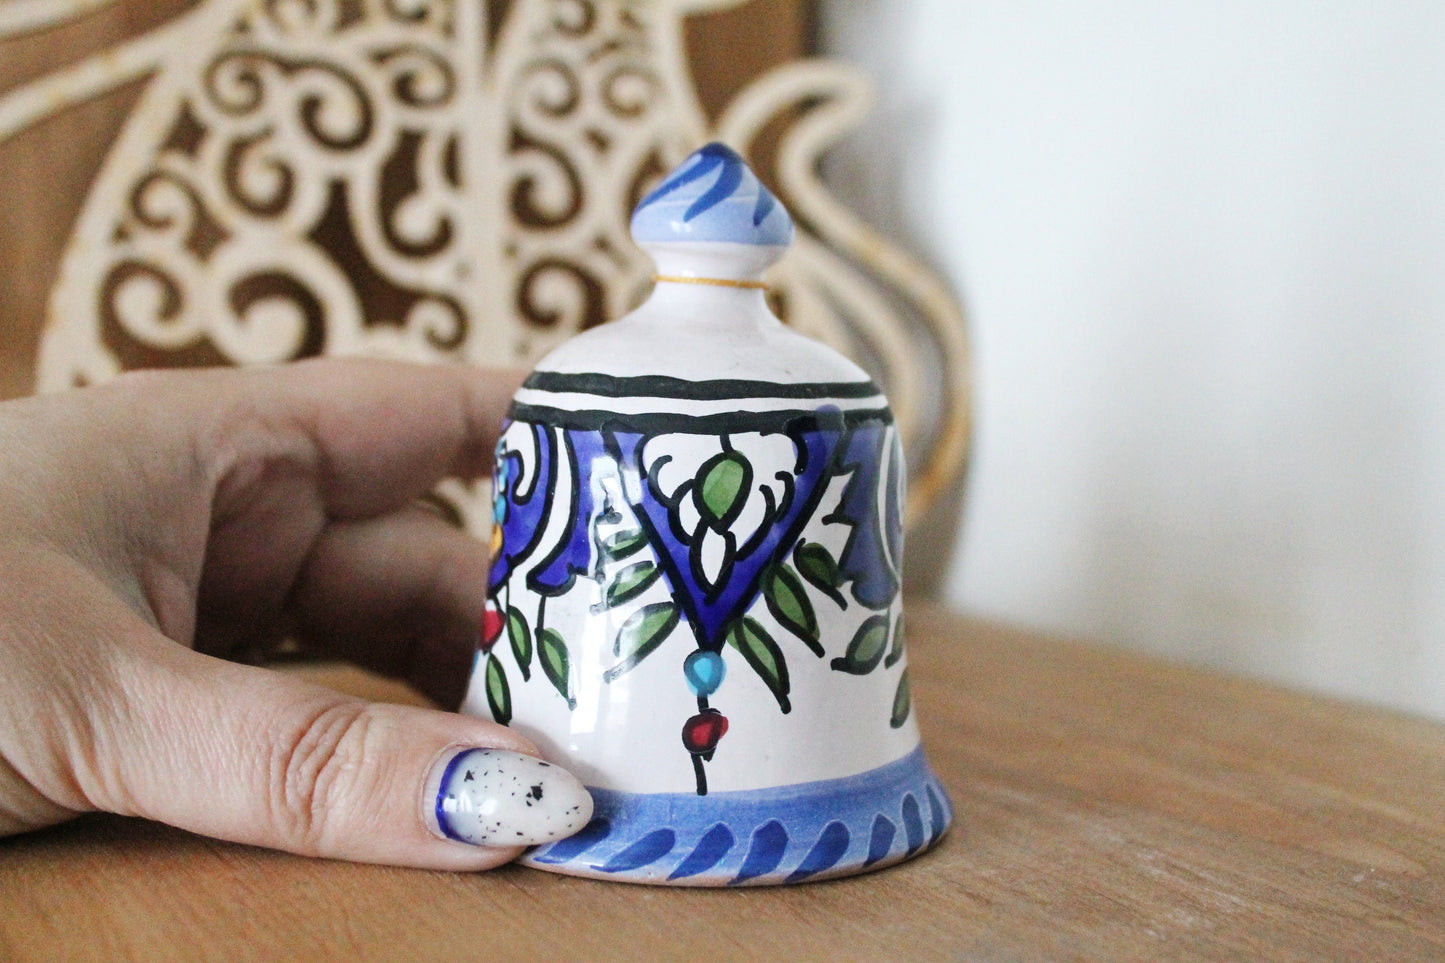 Vintage beautiful ceramic Bell - 3.8 inches - Vintage Souvenir - Germany porcelain